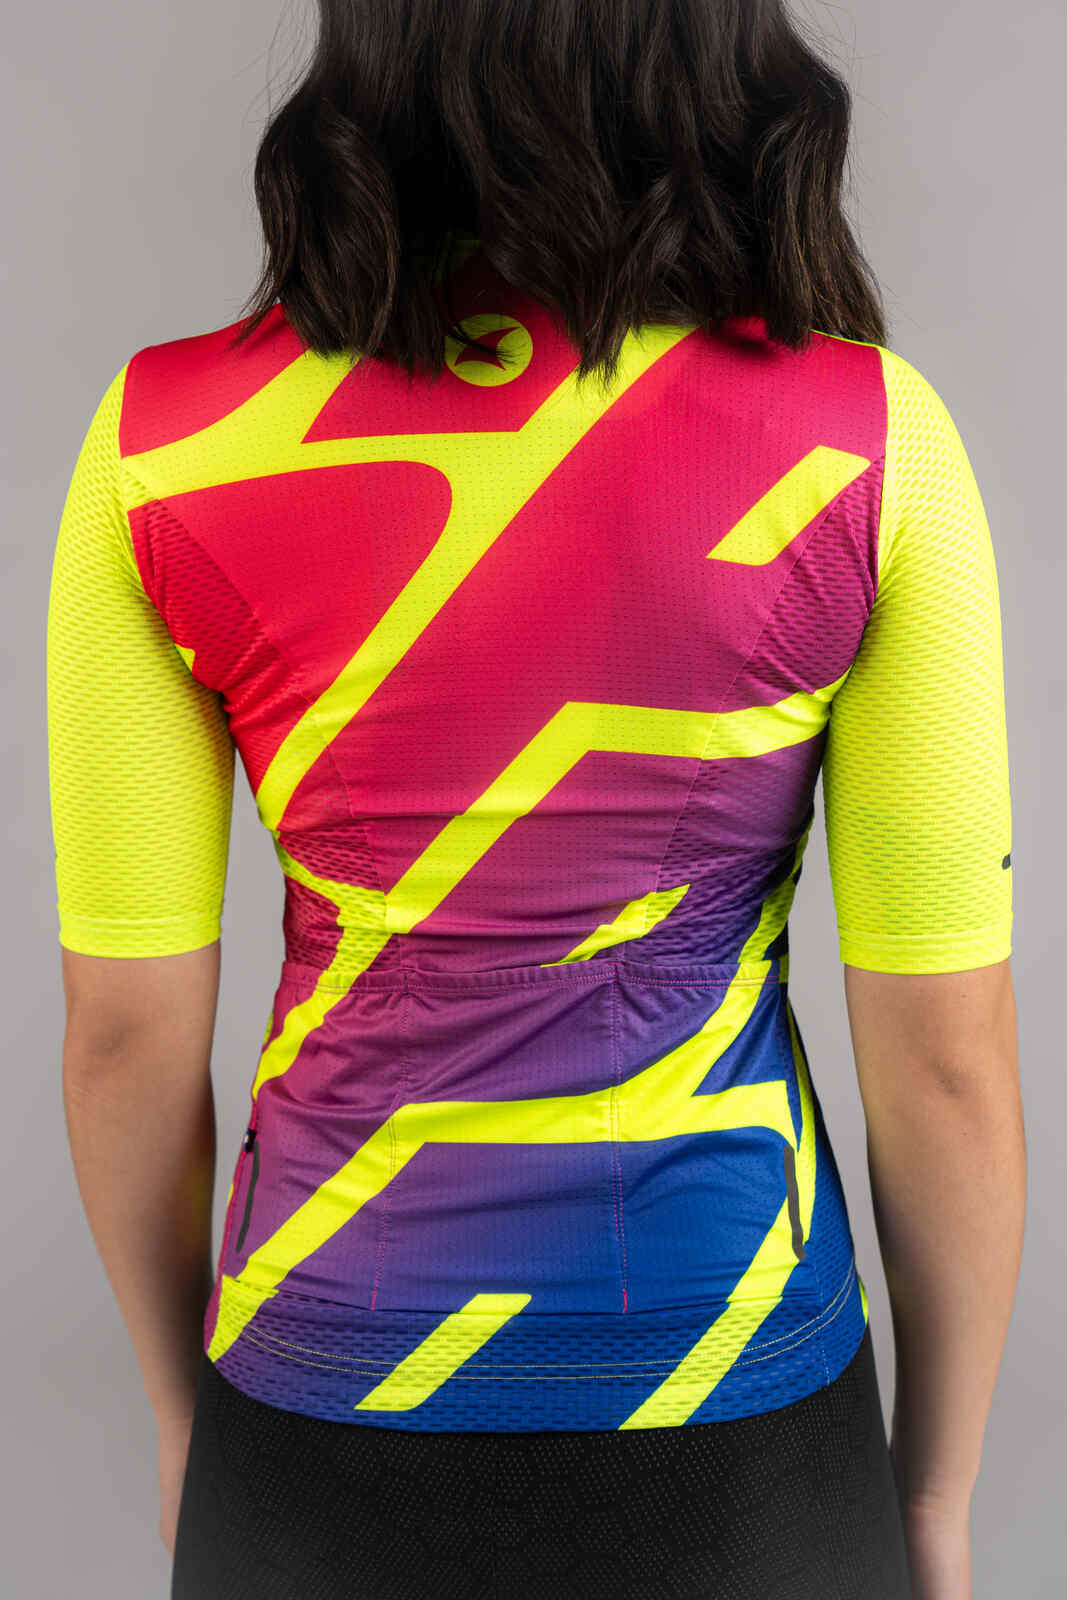 Women's High-Viz Yellow Mesh Cycling Jersey - Back Pockets